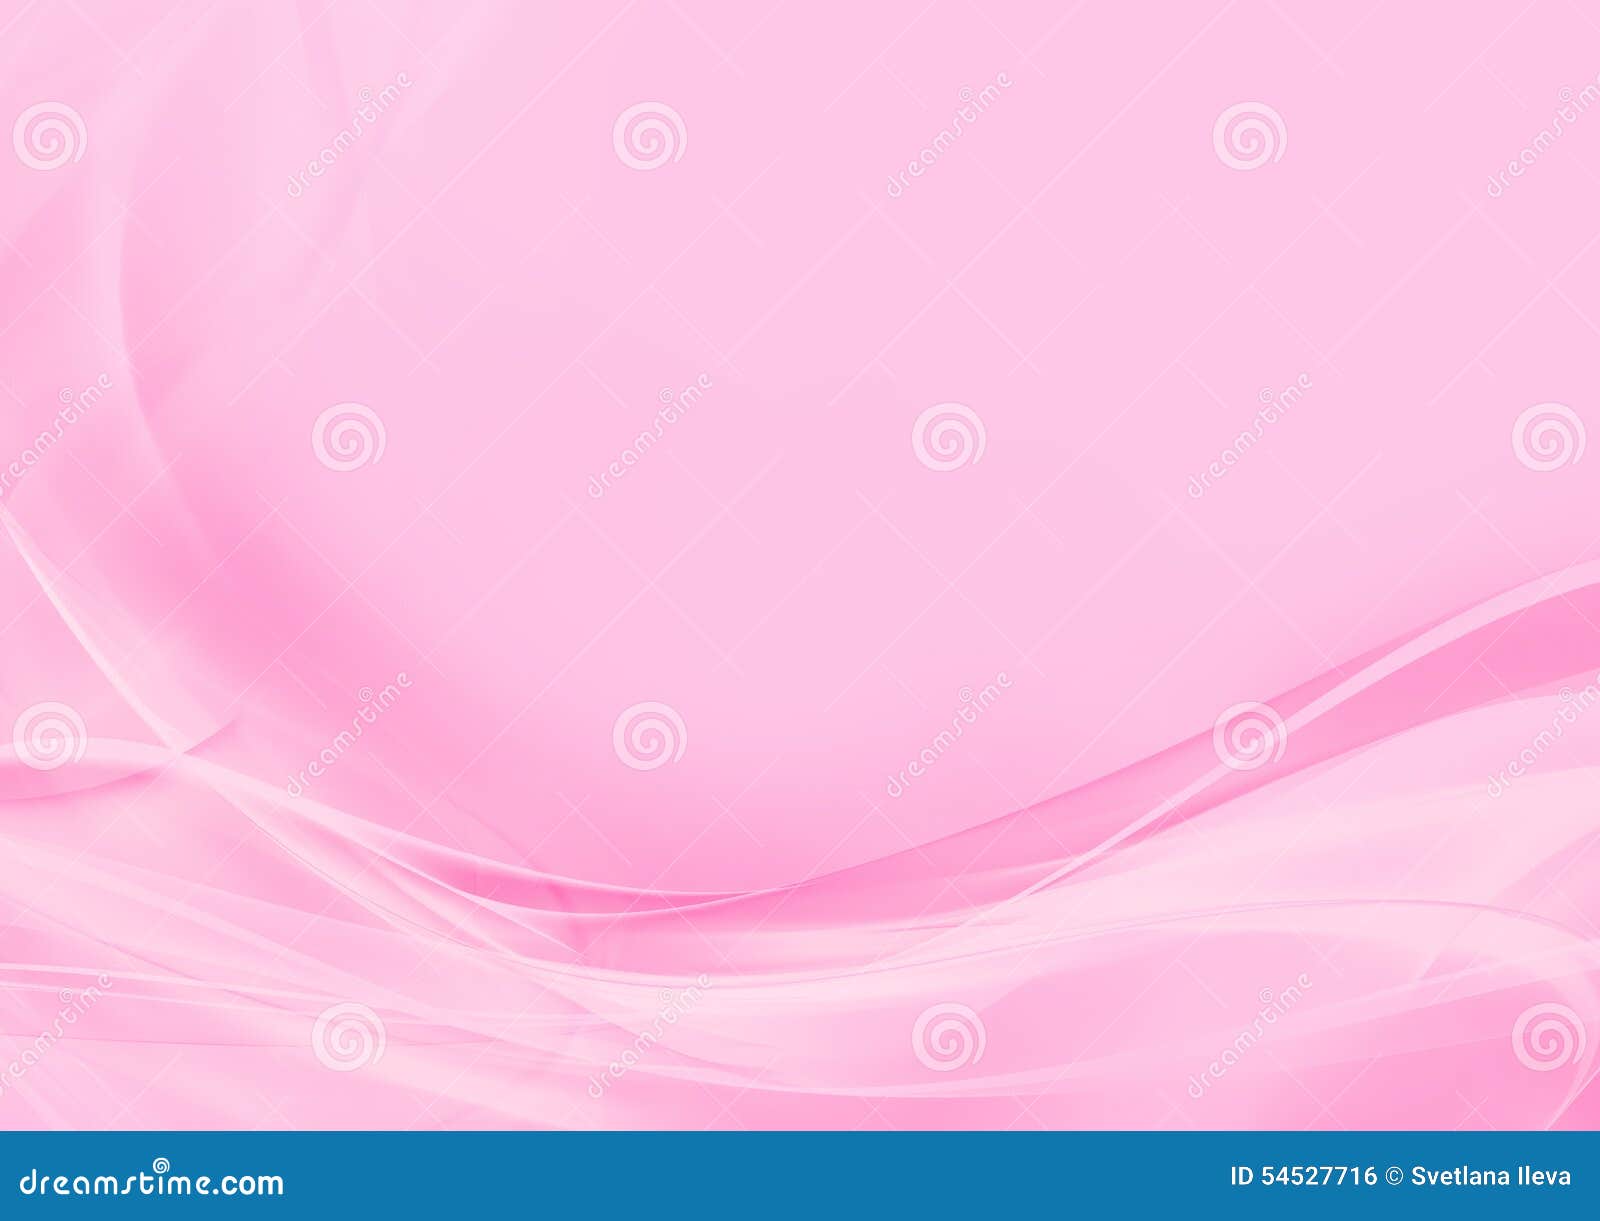 Abstract Pastel Pink Background Stock Illustration - Illustration of